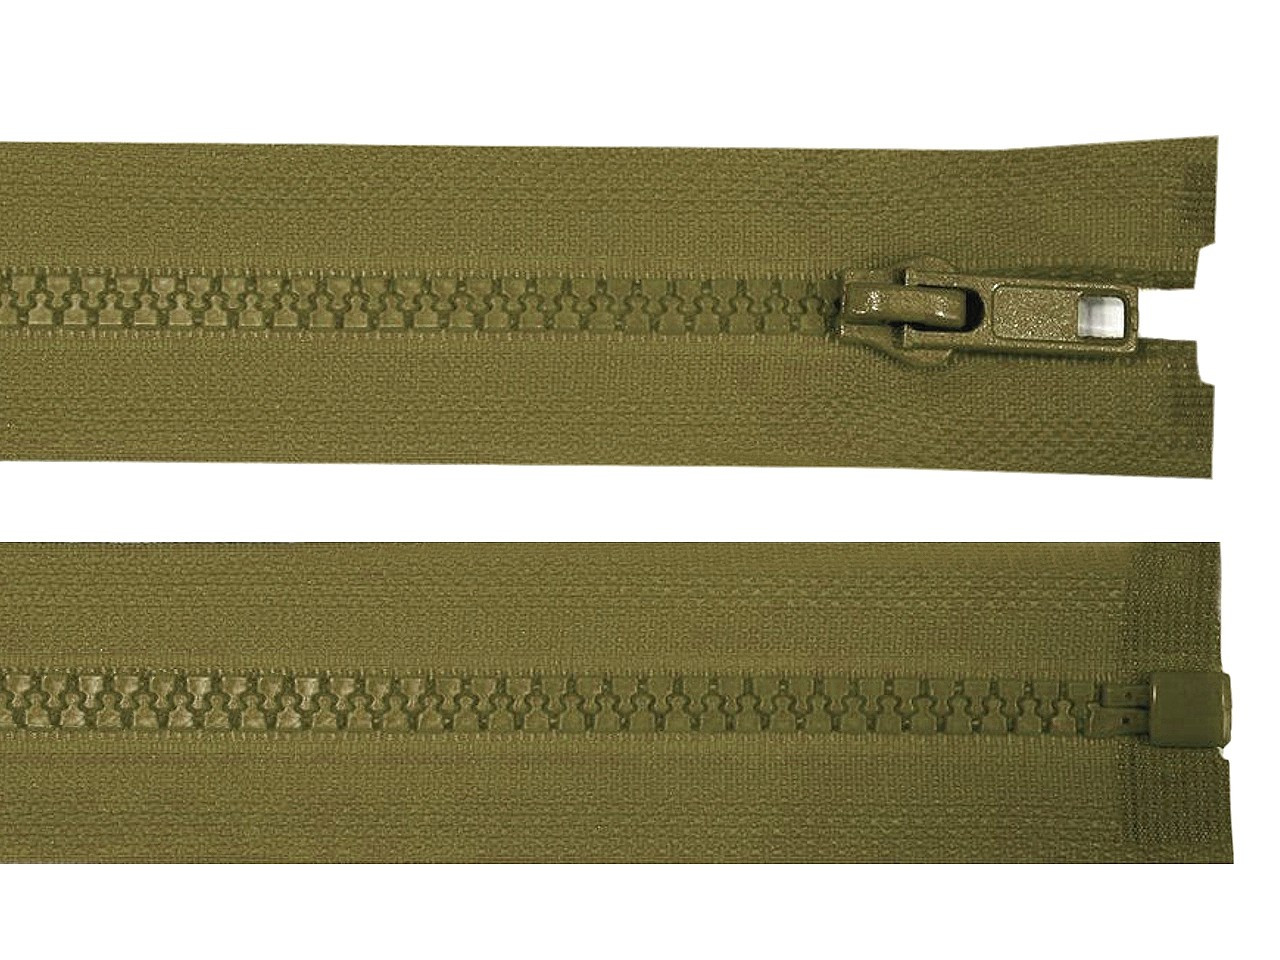 Kostěný zip No 5 délka 90 cm bundový, barva 298 zelená khaki tmavá